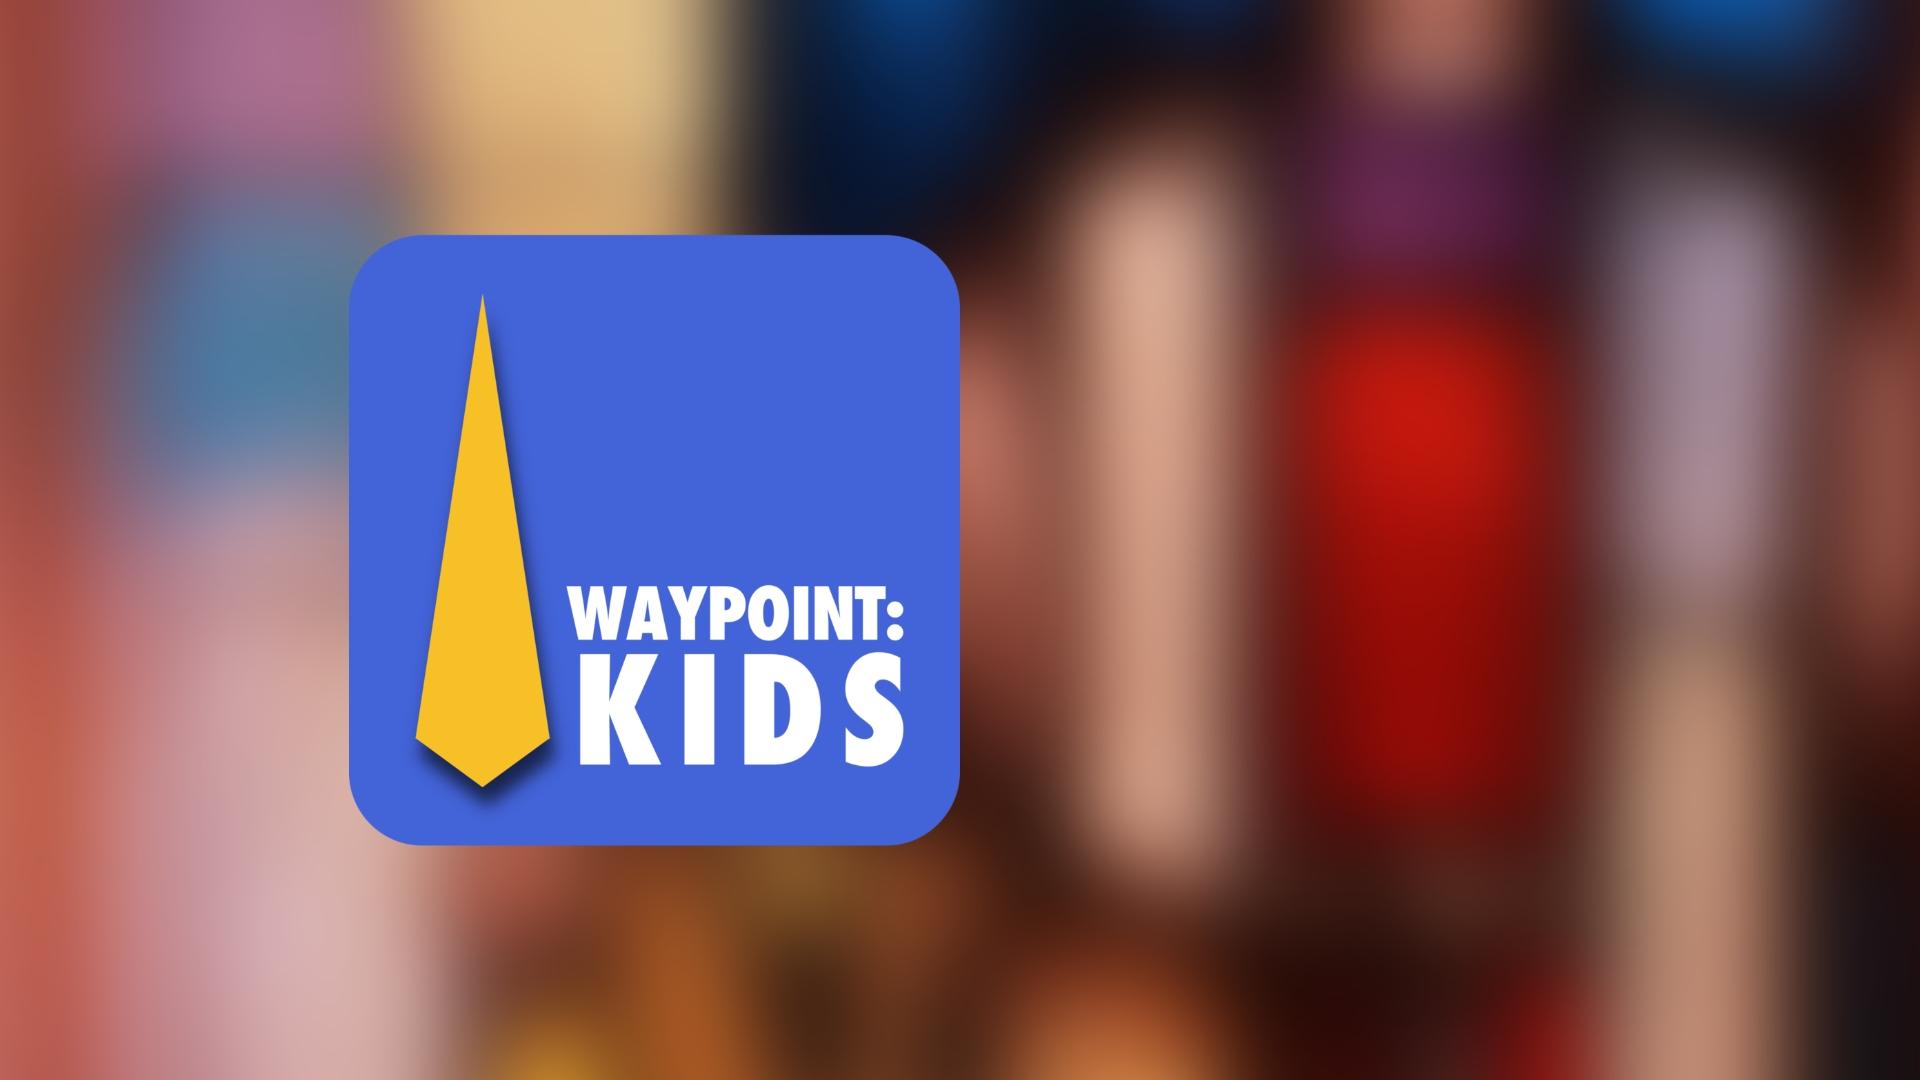 Waypoint:Kids program announced